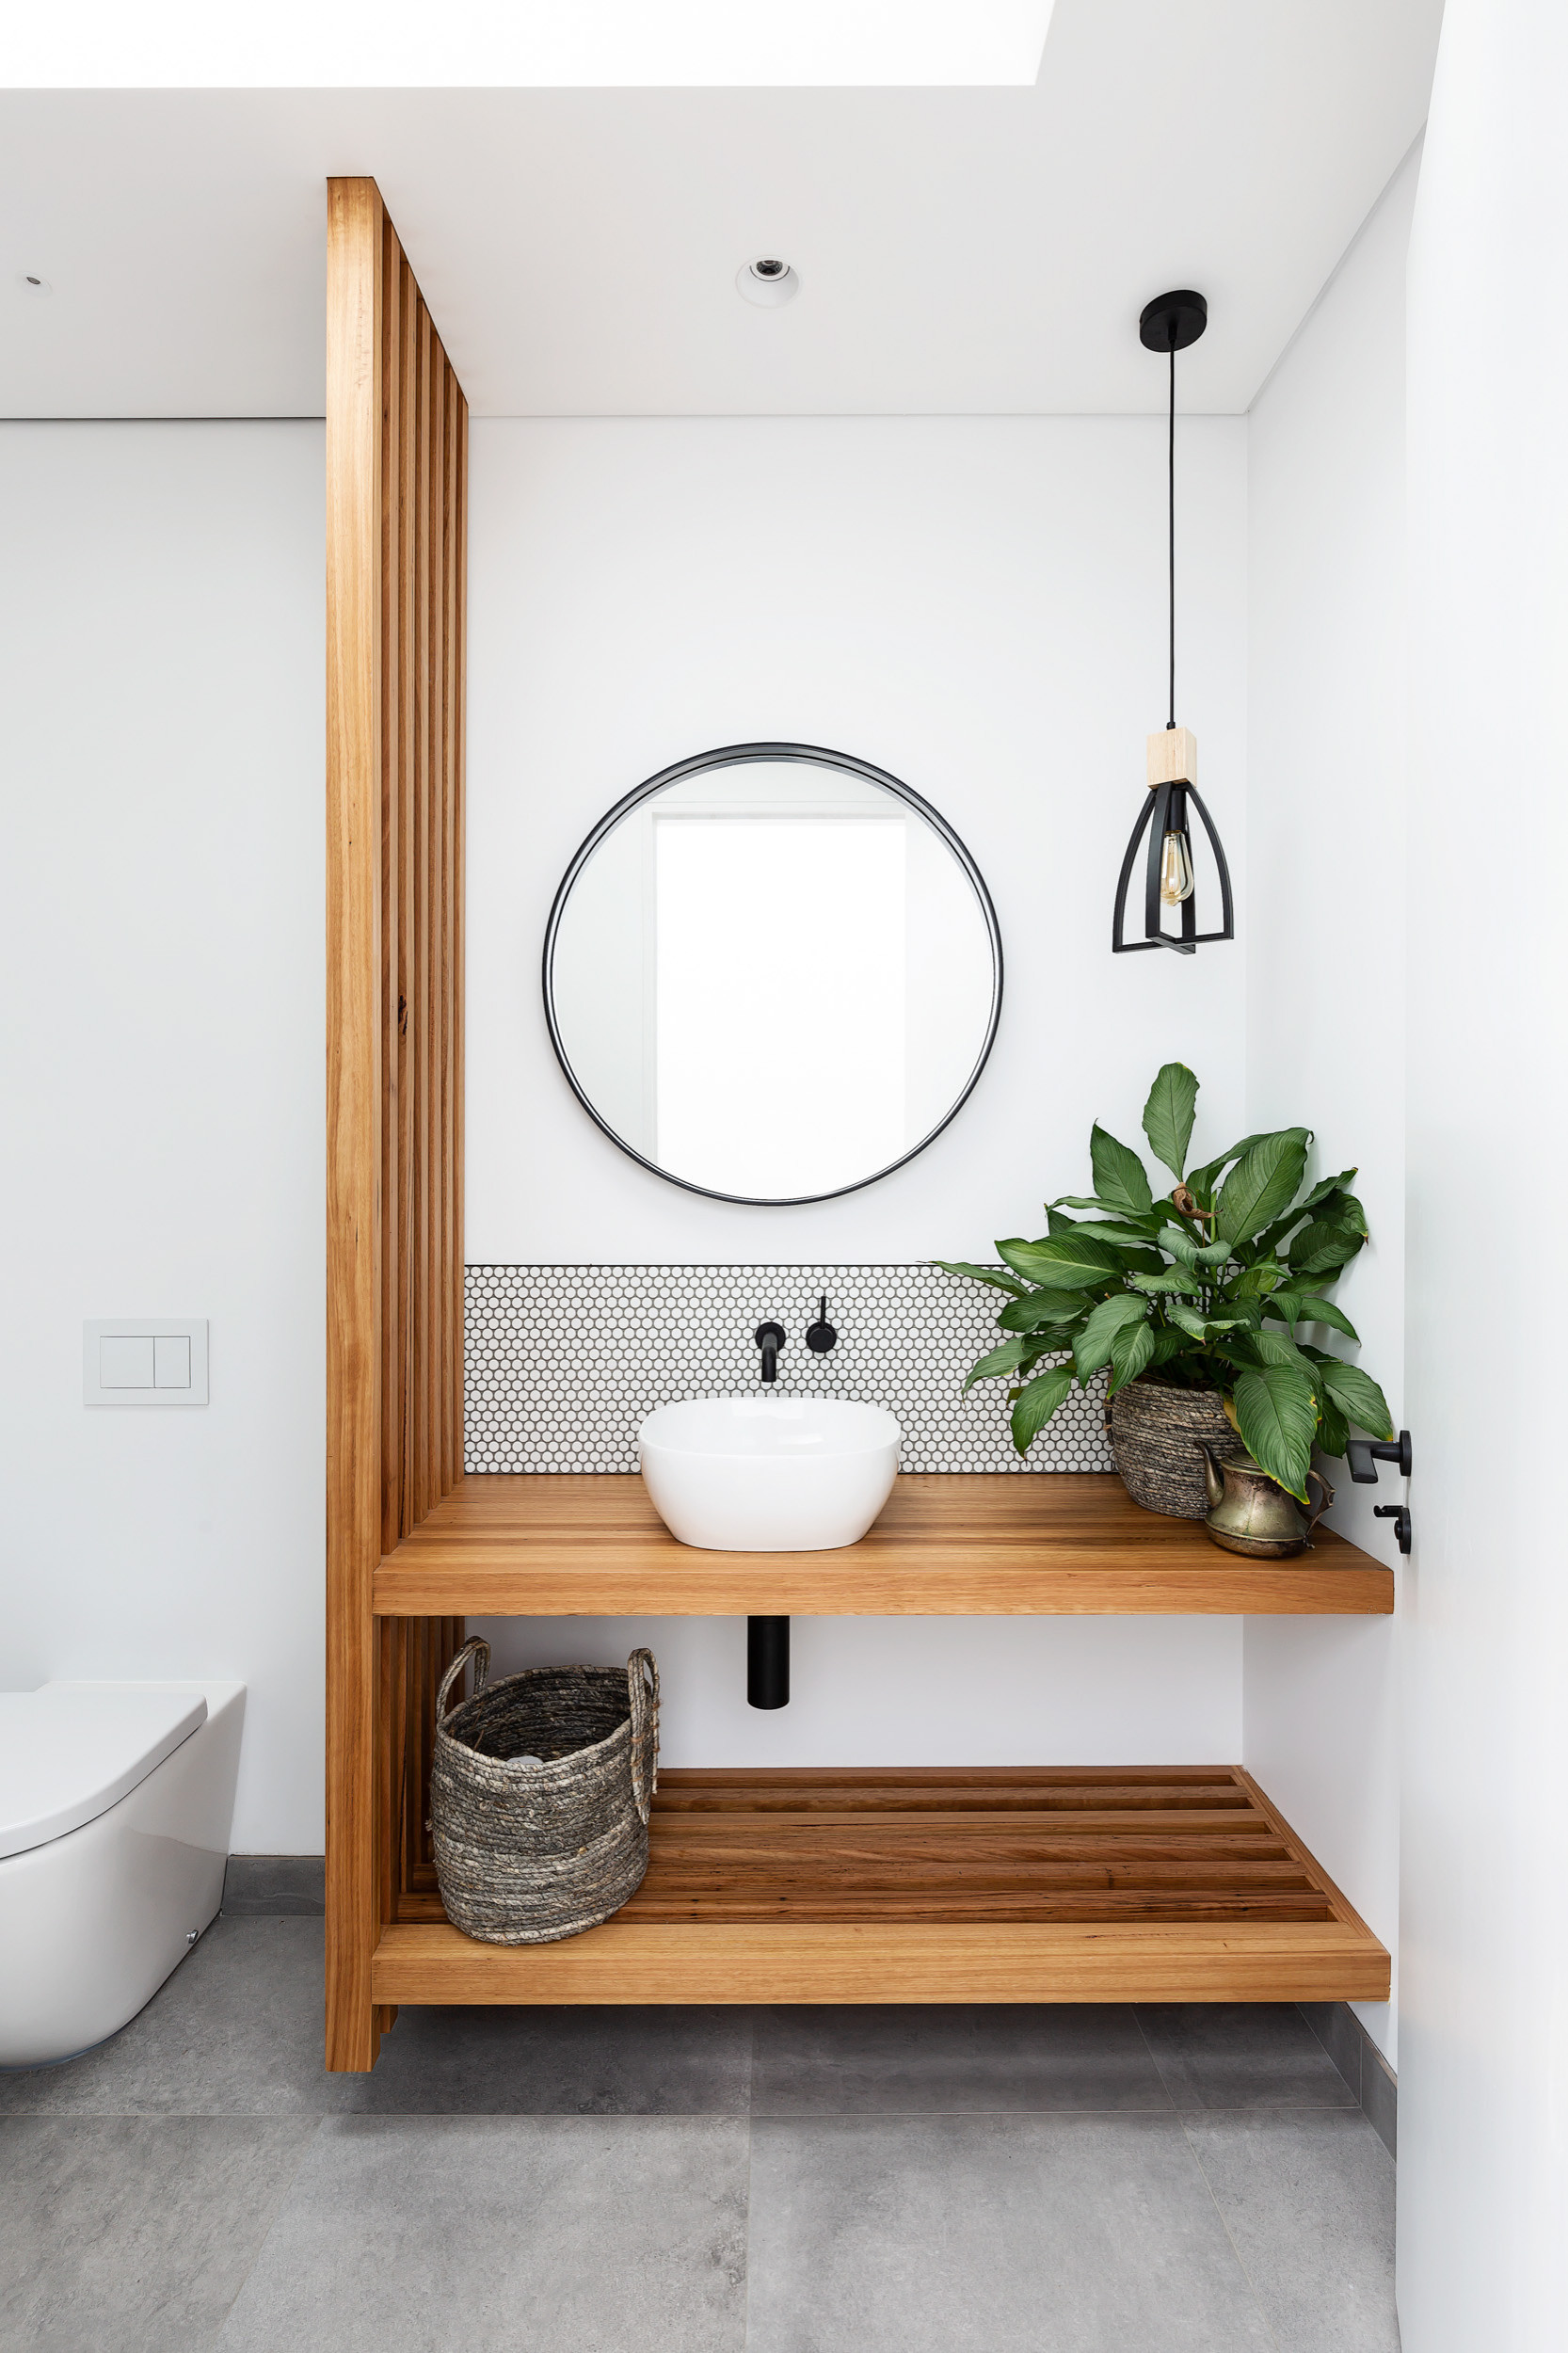 25 Modern Ideas for Small Bathroom Storage Spaces